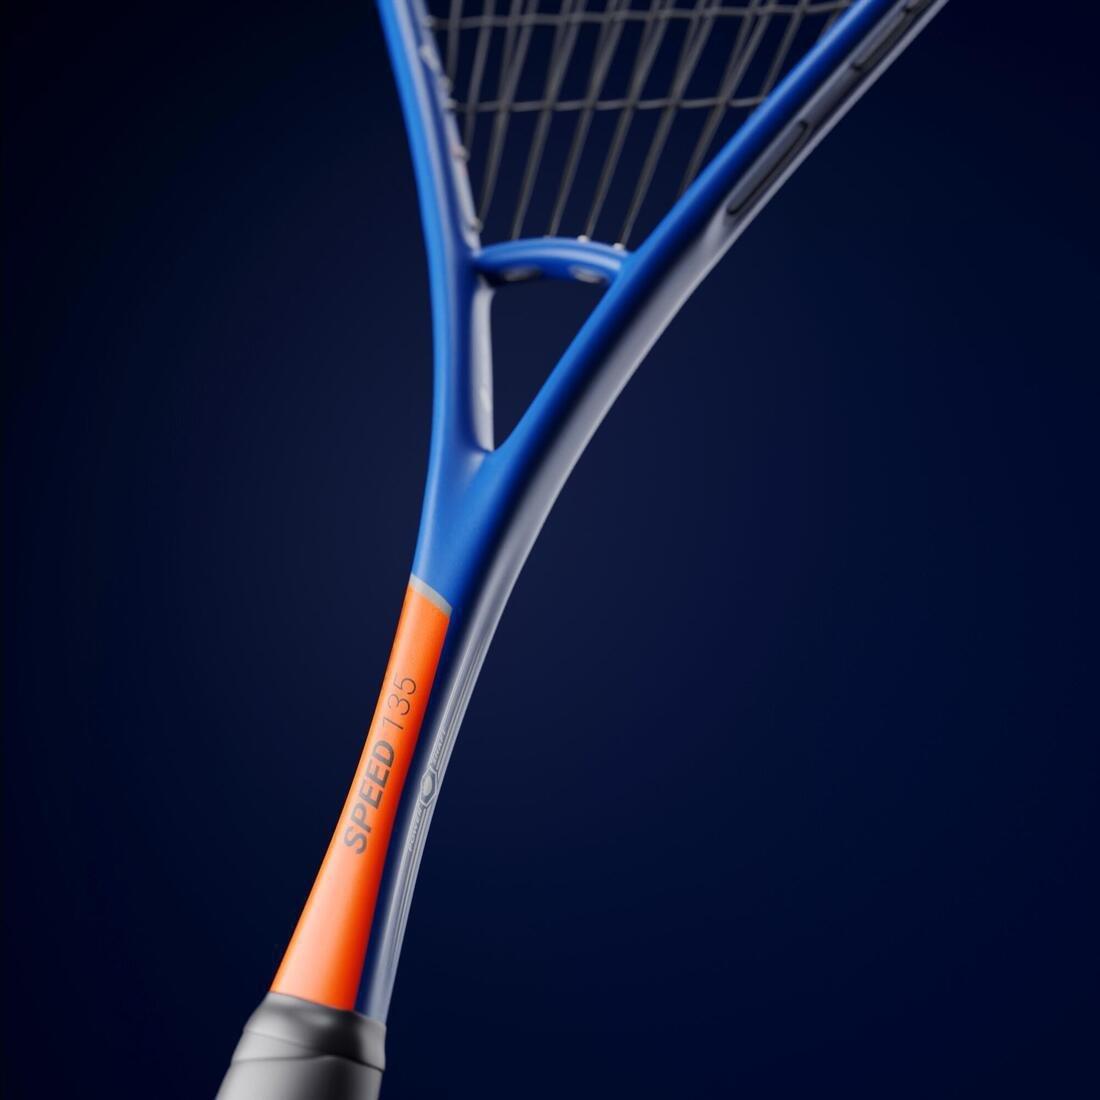 PERFLY - Squash Racket Perfly Speed 135